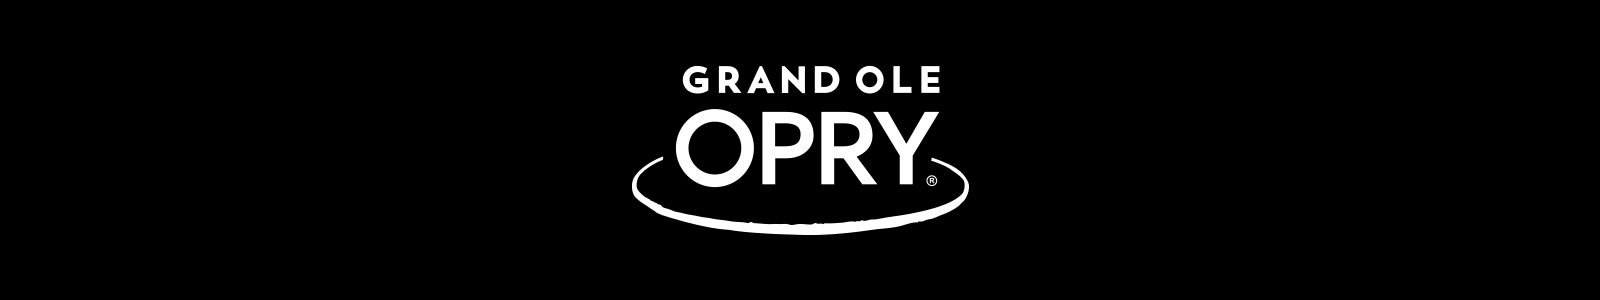 GRAND OLE OPRY